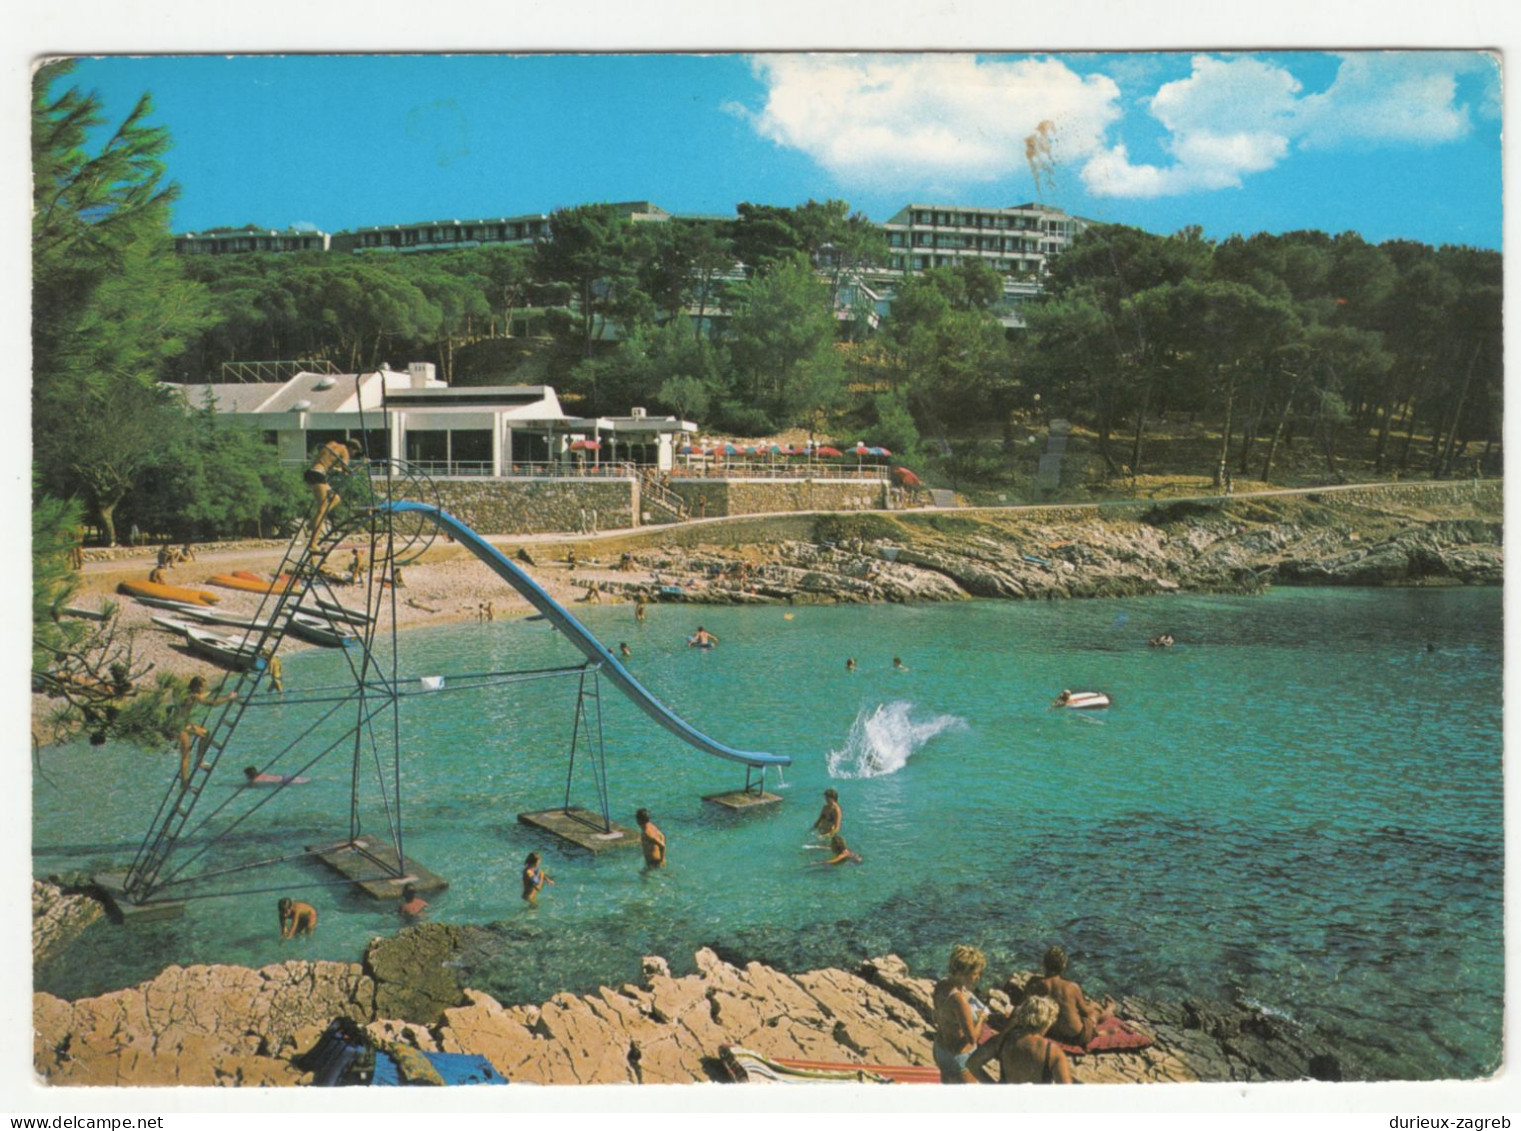 Mali Lošinj Old Postcard Posted 1978 240510 - Kroatien